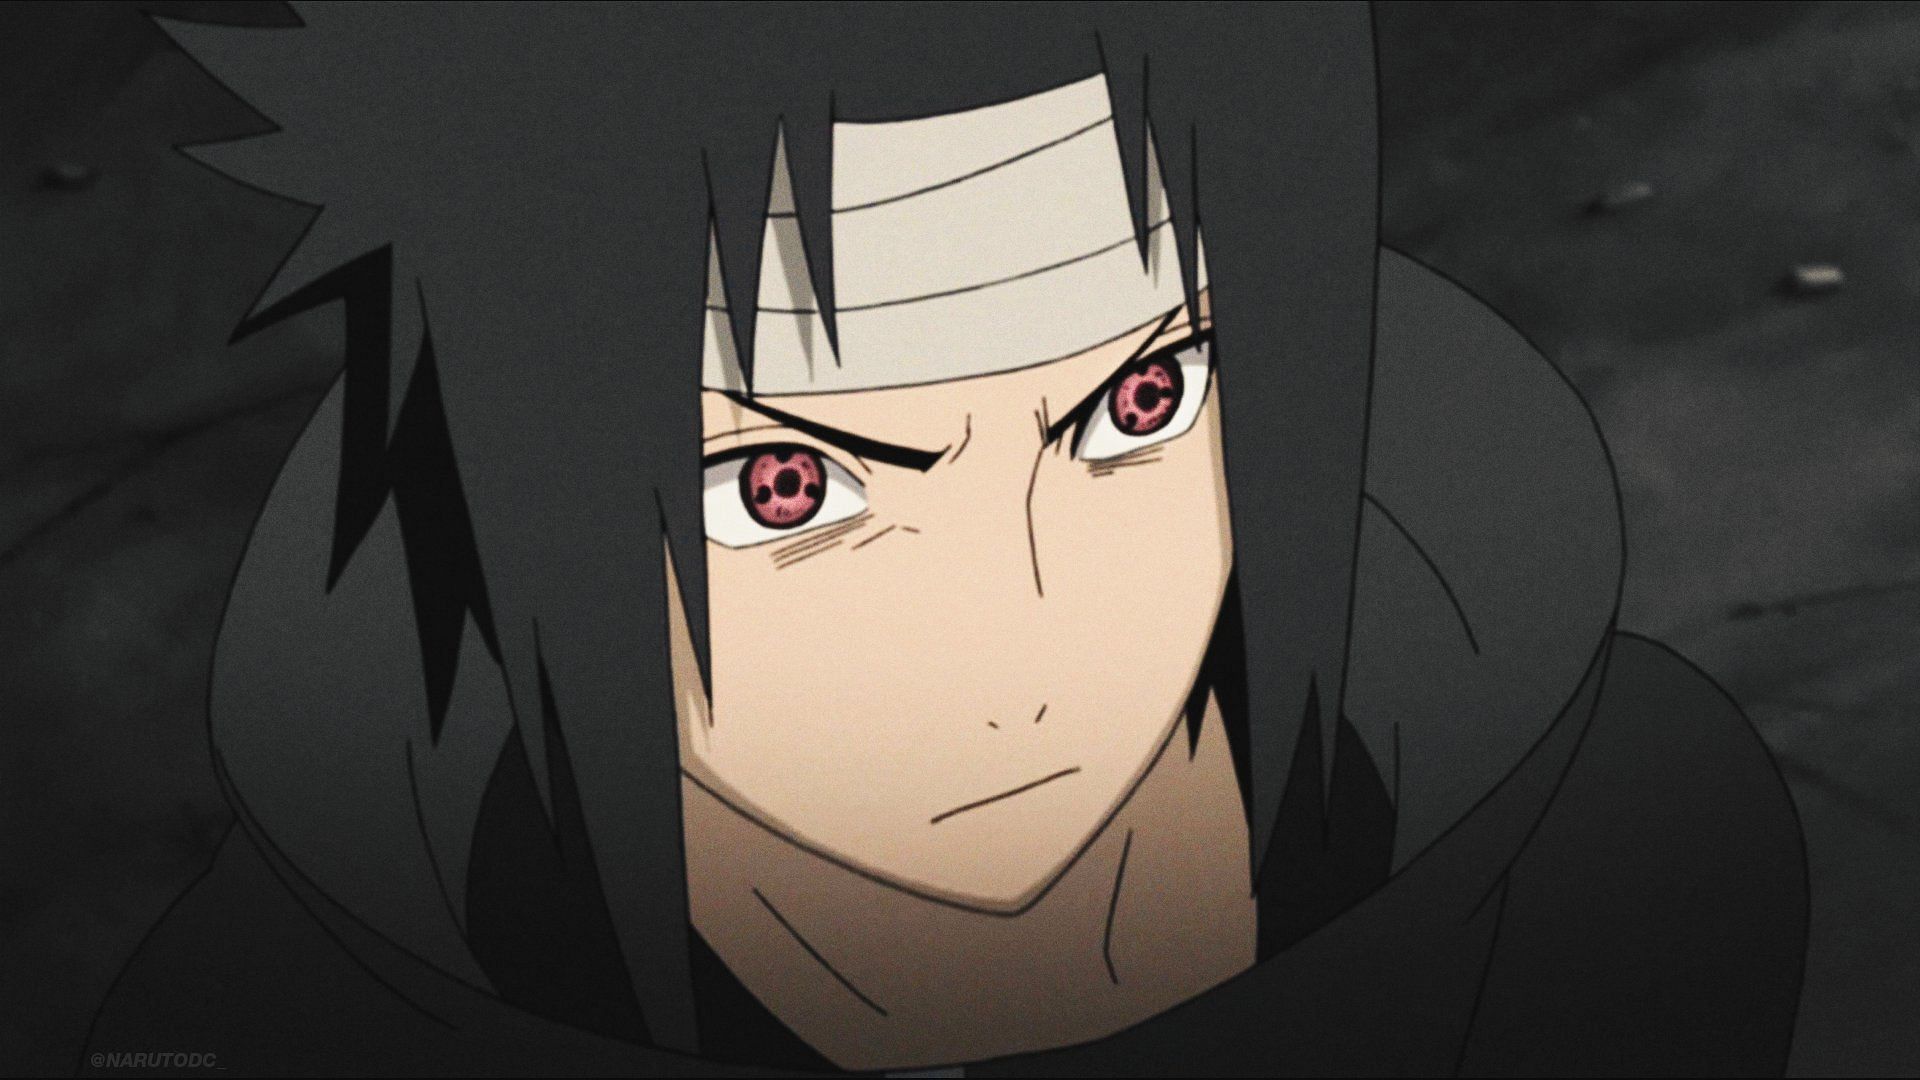 Sasuke as seen in Naruto (Image via Studio Pierrot)